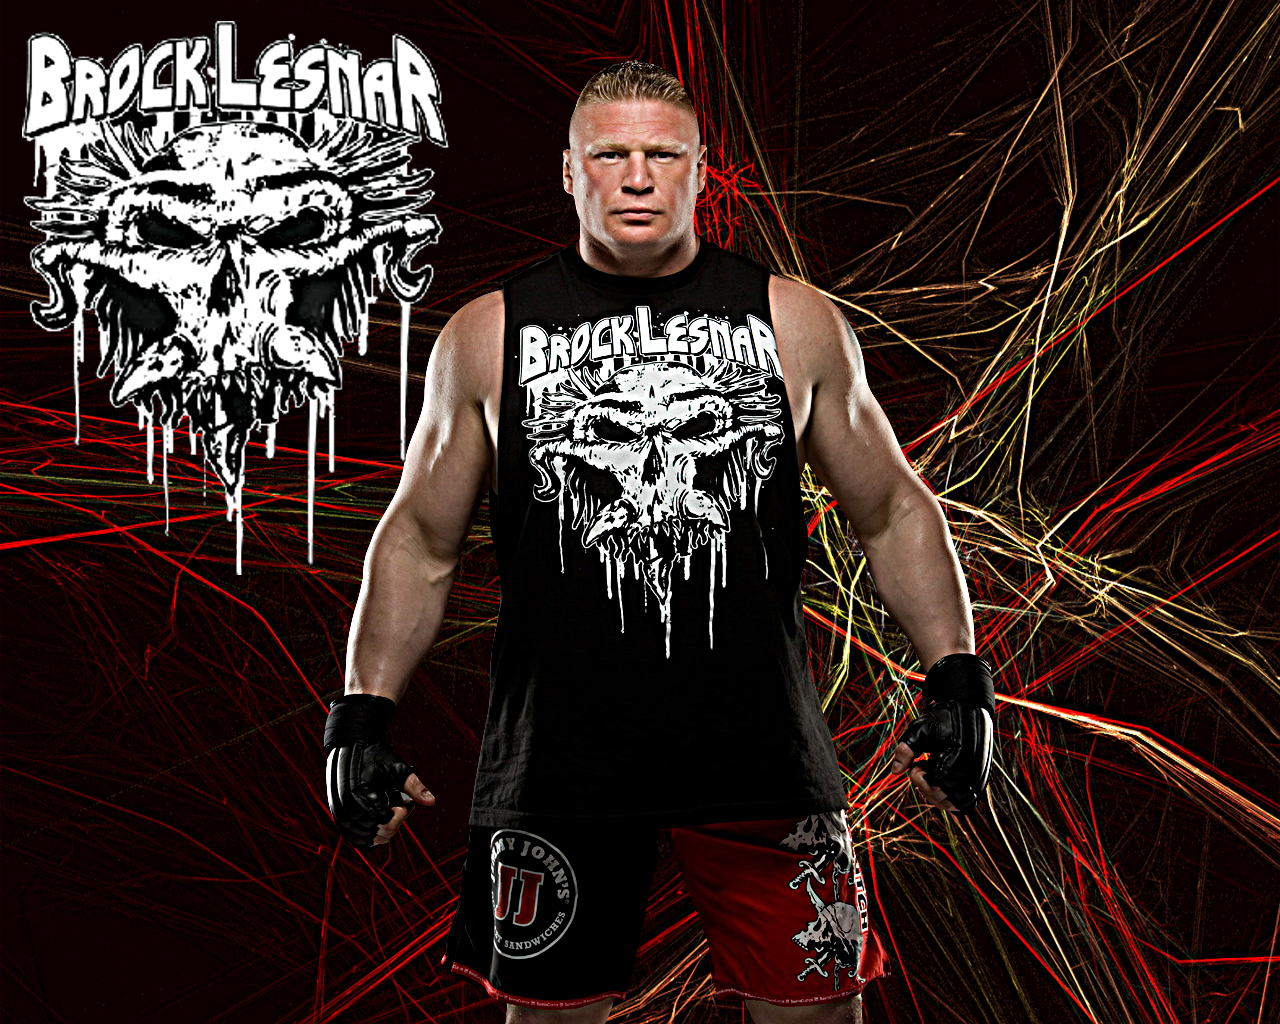  download Brock Lesnar Hd Wallpapers Download WWE HD WALLPAPER 1280x1024